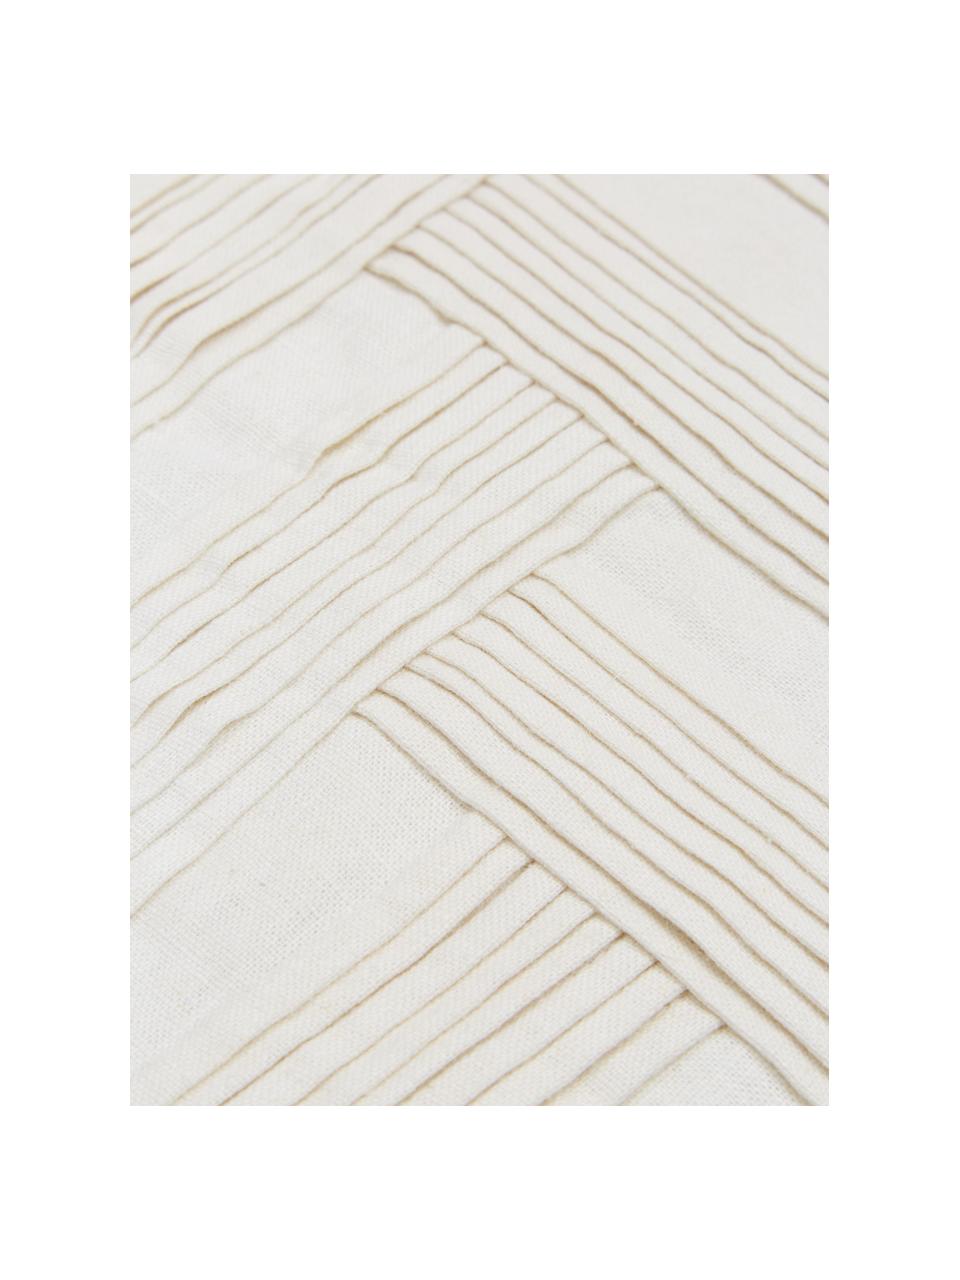 Federa arredo strutturata in lino bianco Maya, 51% lino, 49% cotone, Bianco crema, Larg. 30 x Lung. 50 cm